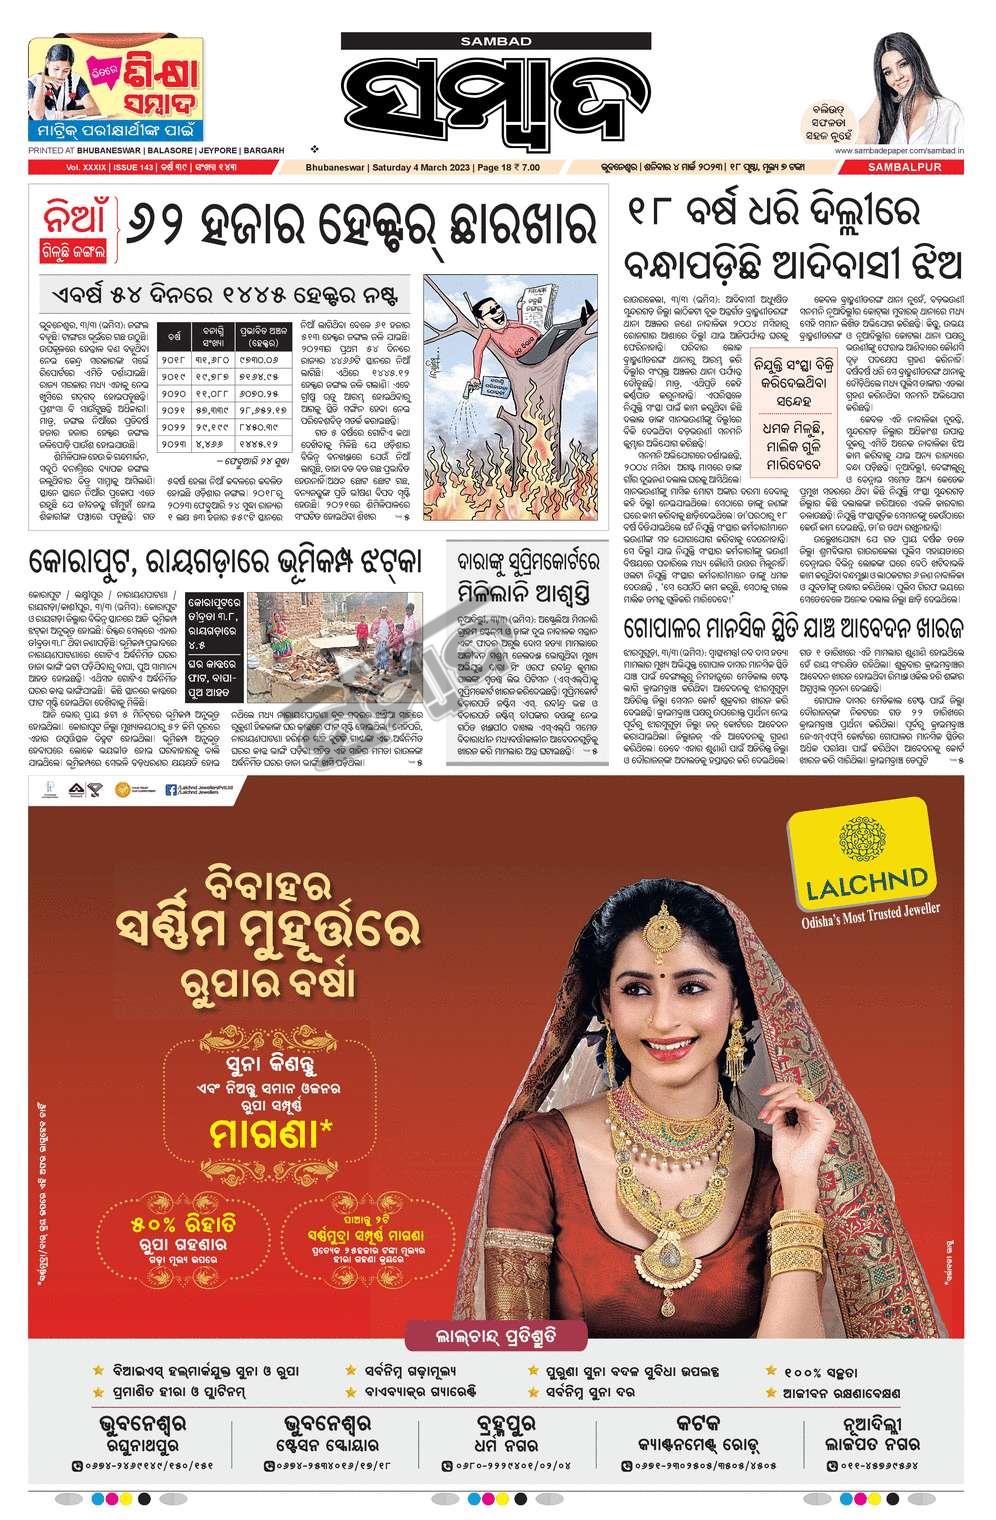 Sambad ePaper : No 1 newpaper of Odisha | Odisha epaper, News paper Odisha  , SAMBALPUR Sambad epaper 